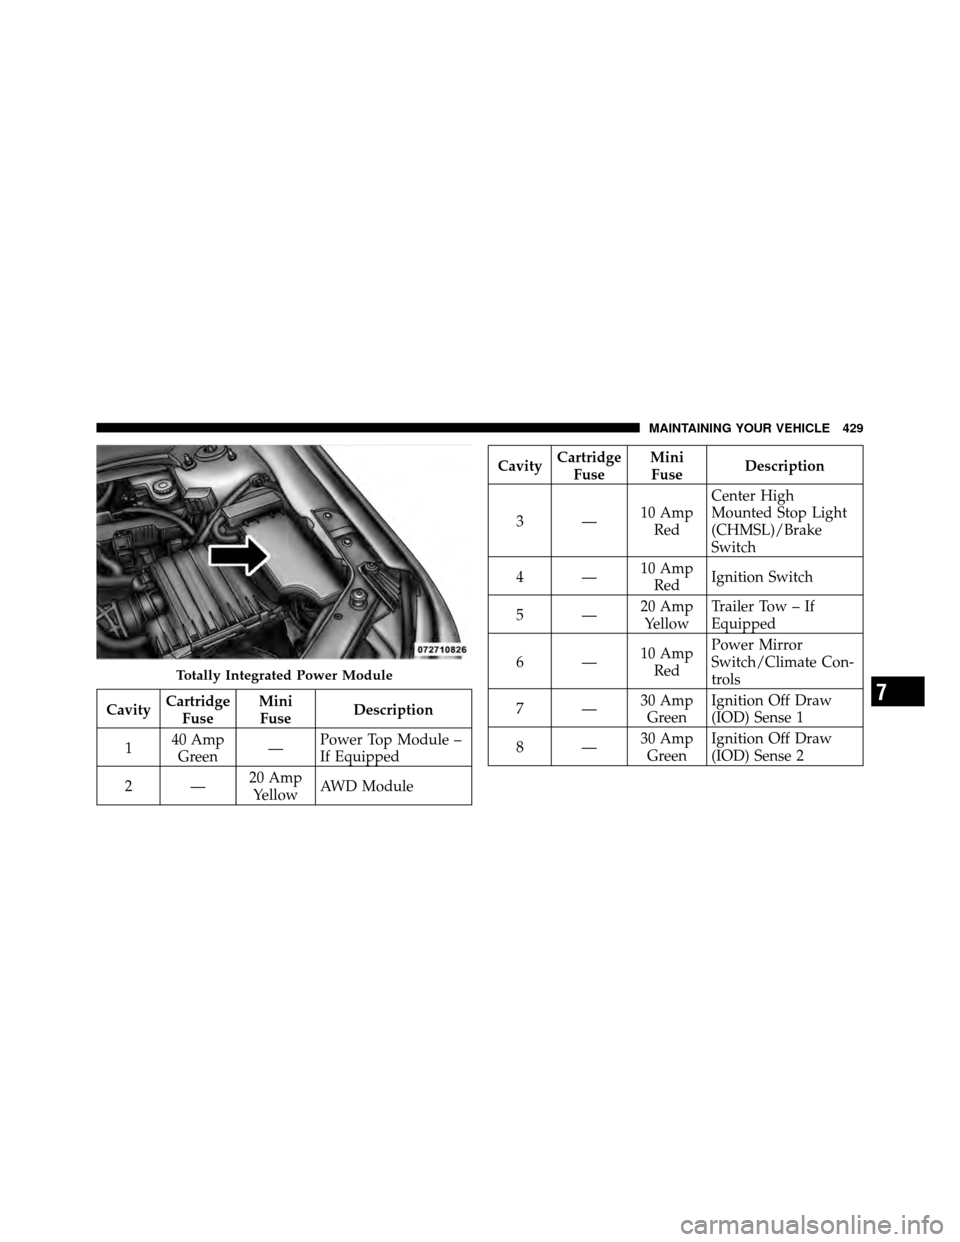 CHRYSLER 200 2011 1.G Owners Manual CavityCartridge
Fuse Mini
Fuse Description
1 40 Amp
Green —Power Top Module –
If Equipped
2— 20 Amp
Yellow AWD Module
CavityCartridge
Fuse Mini
Fuse Description
3— 10 Amp
Red Center High
Mount